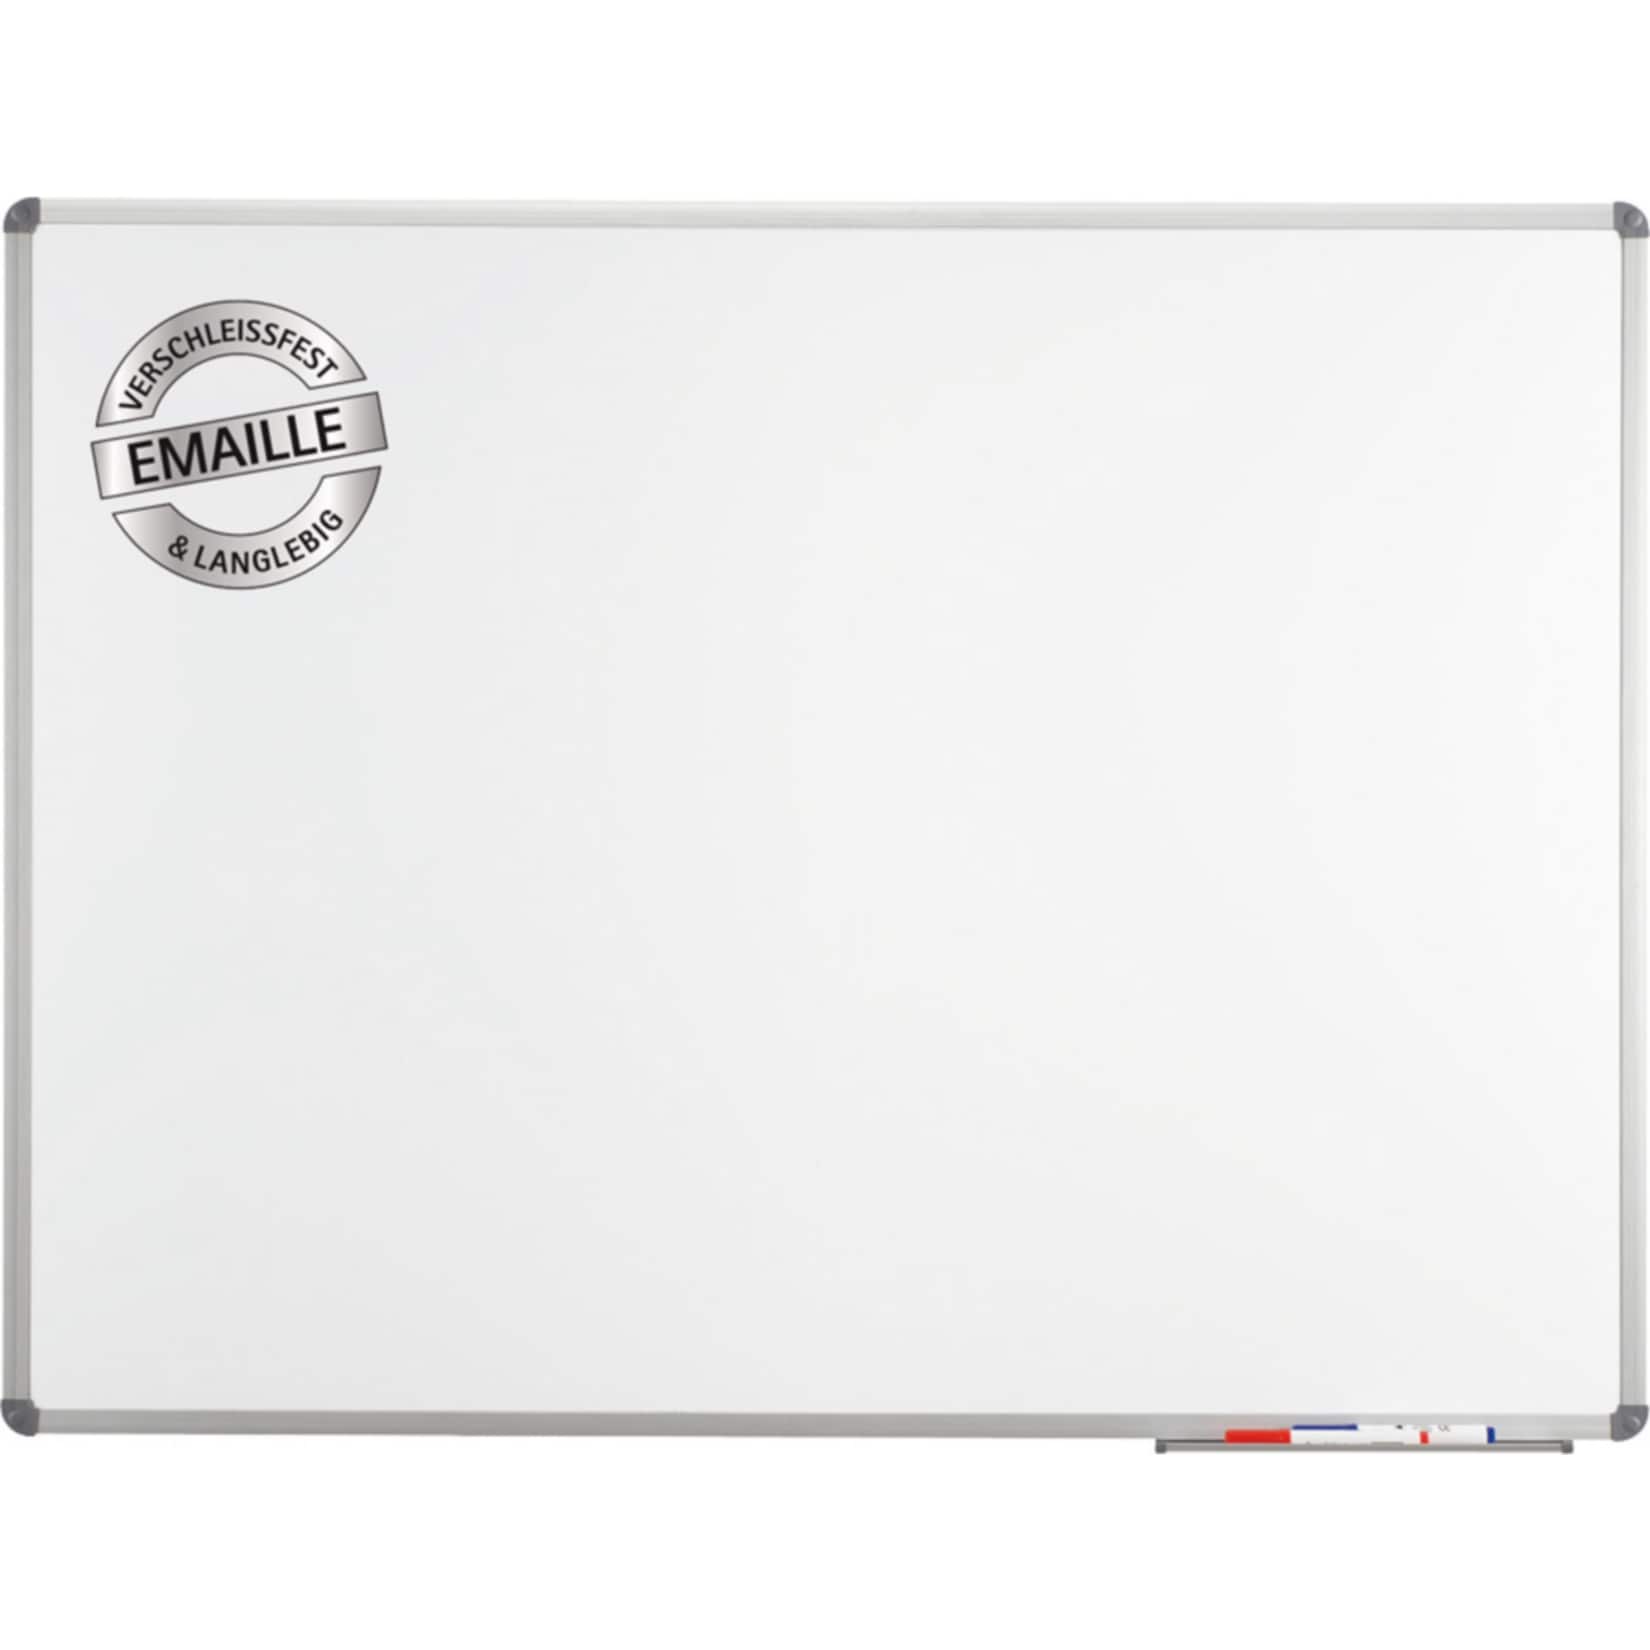 MAUL Whiteboard MAULstandard, Emaille - 100 x 150 cm